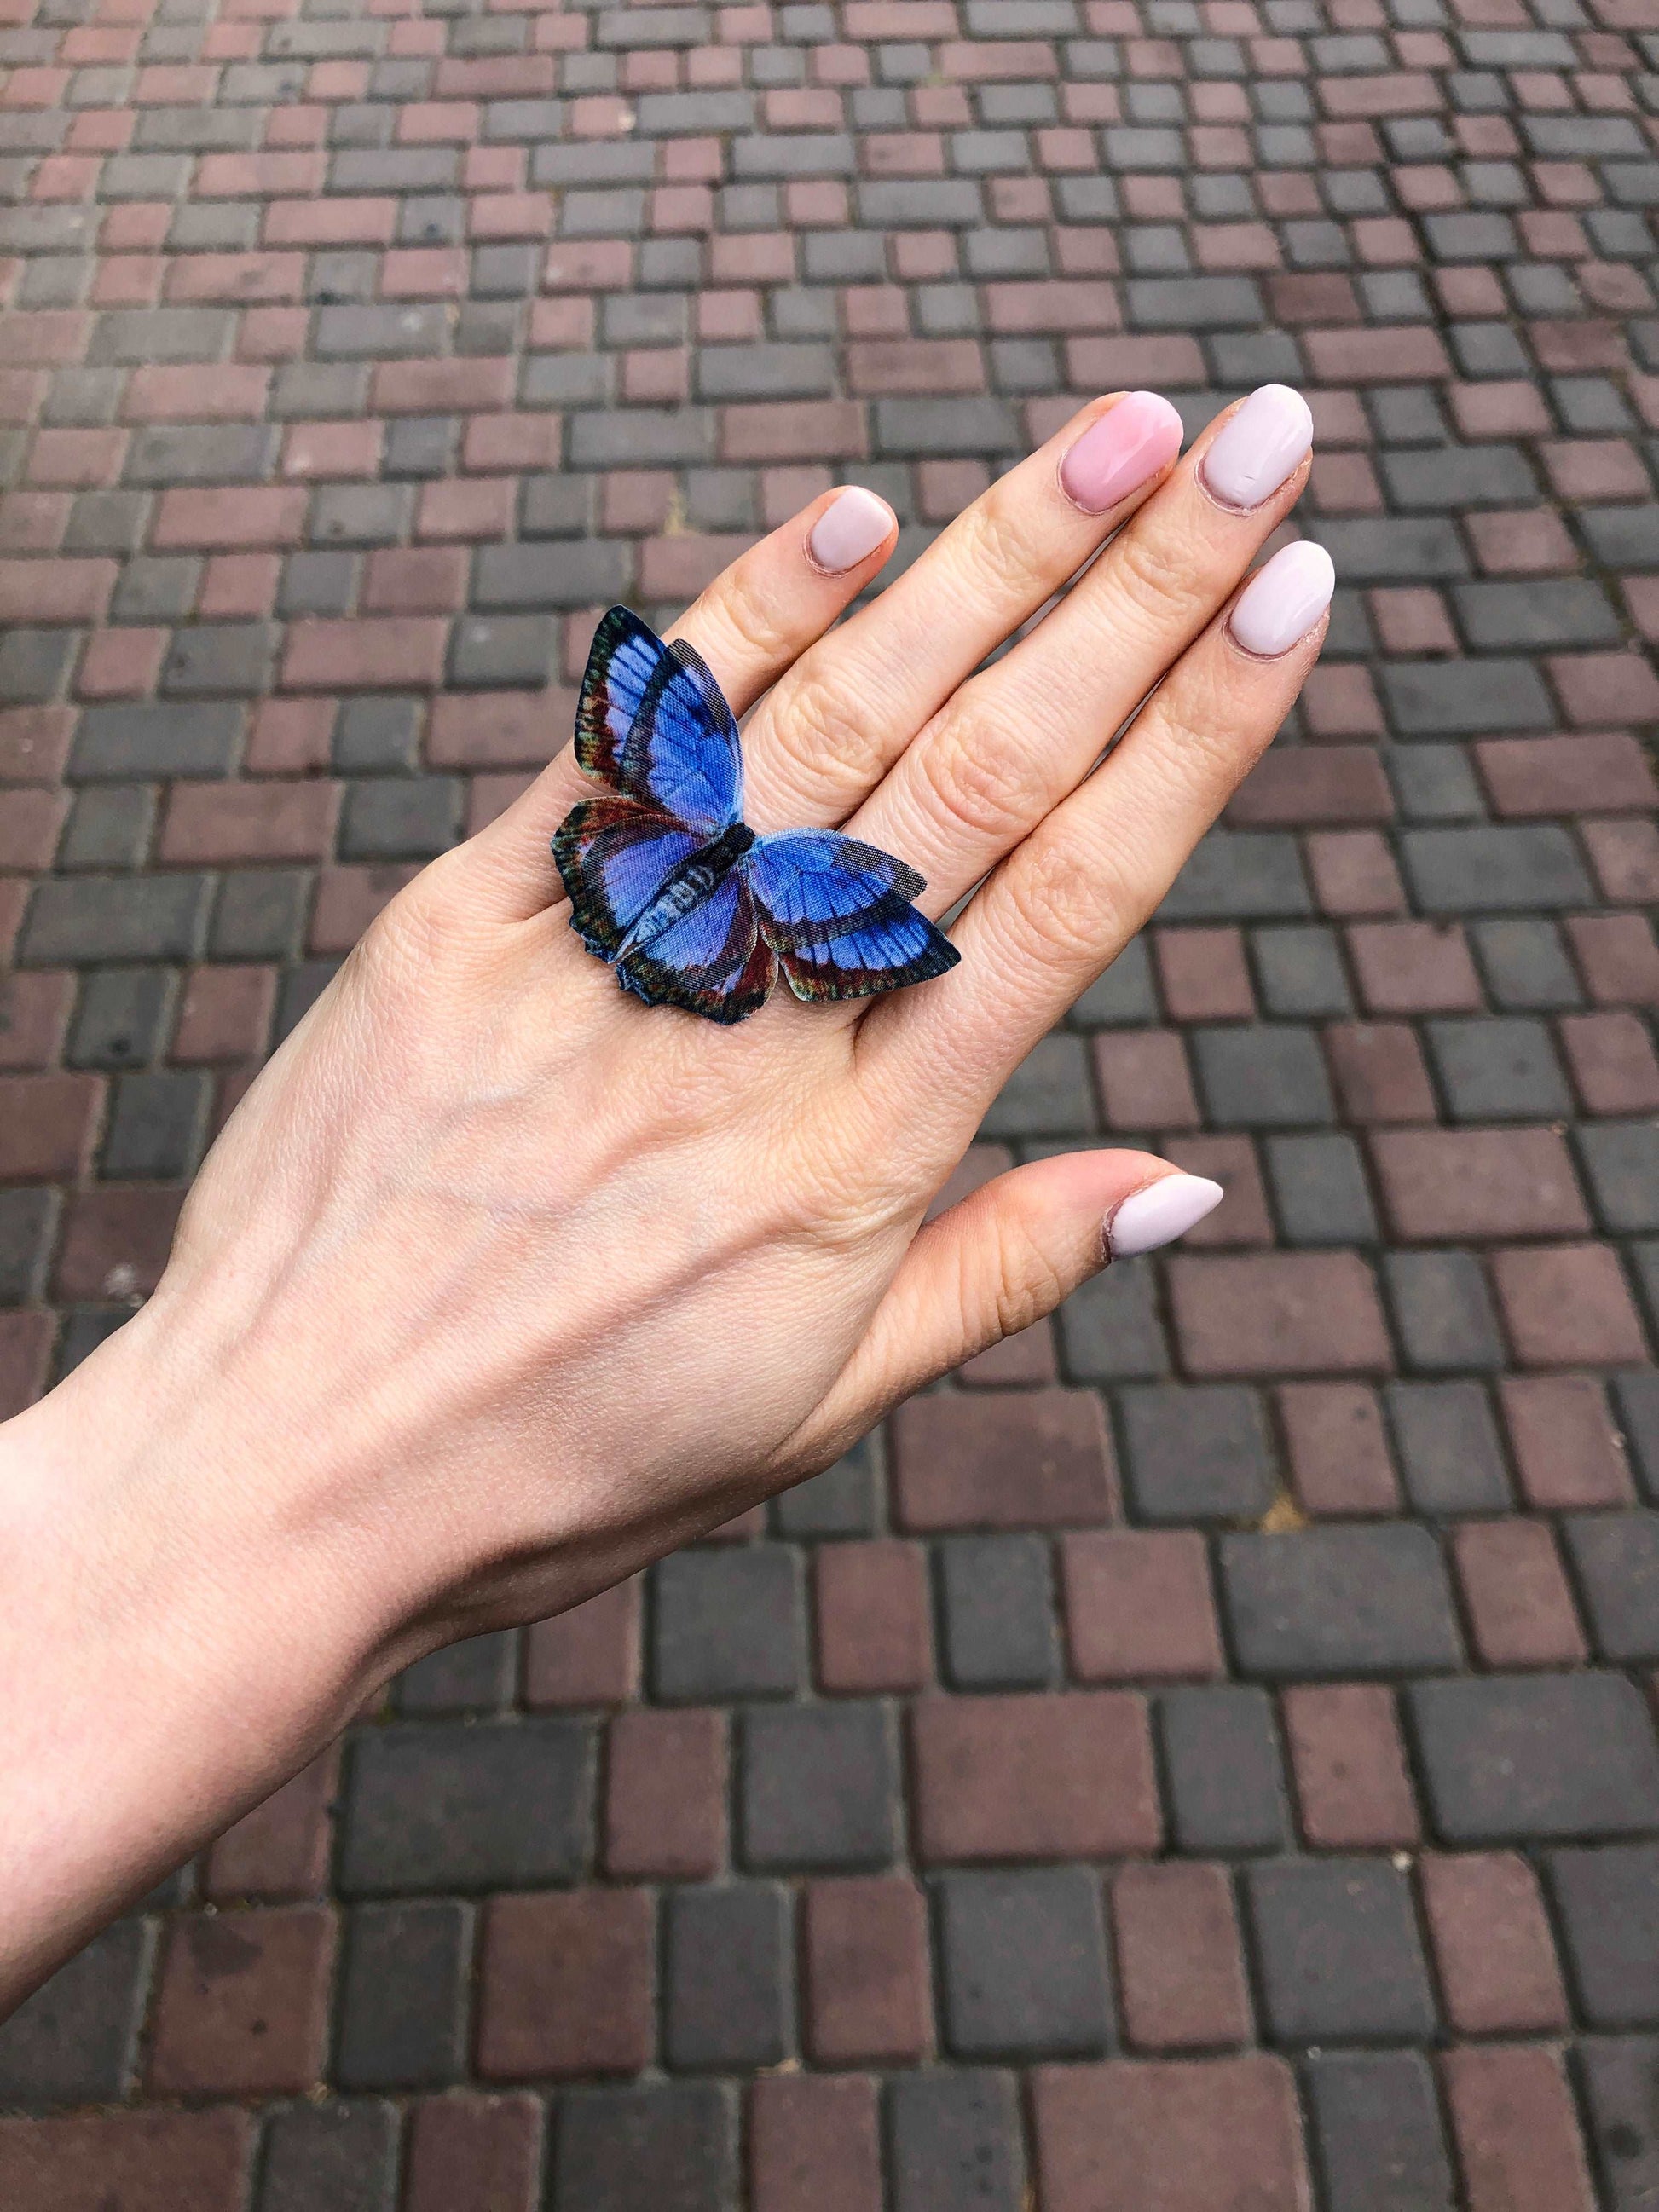 Blue Butterfly Rings on Fingers